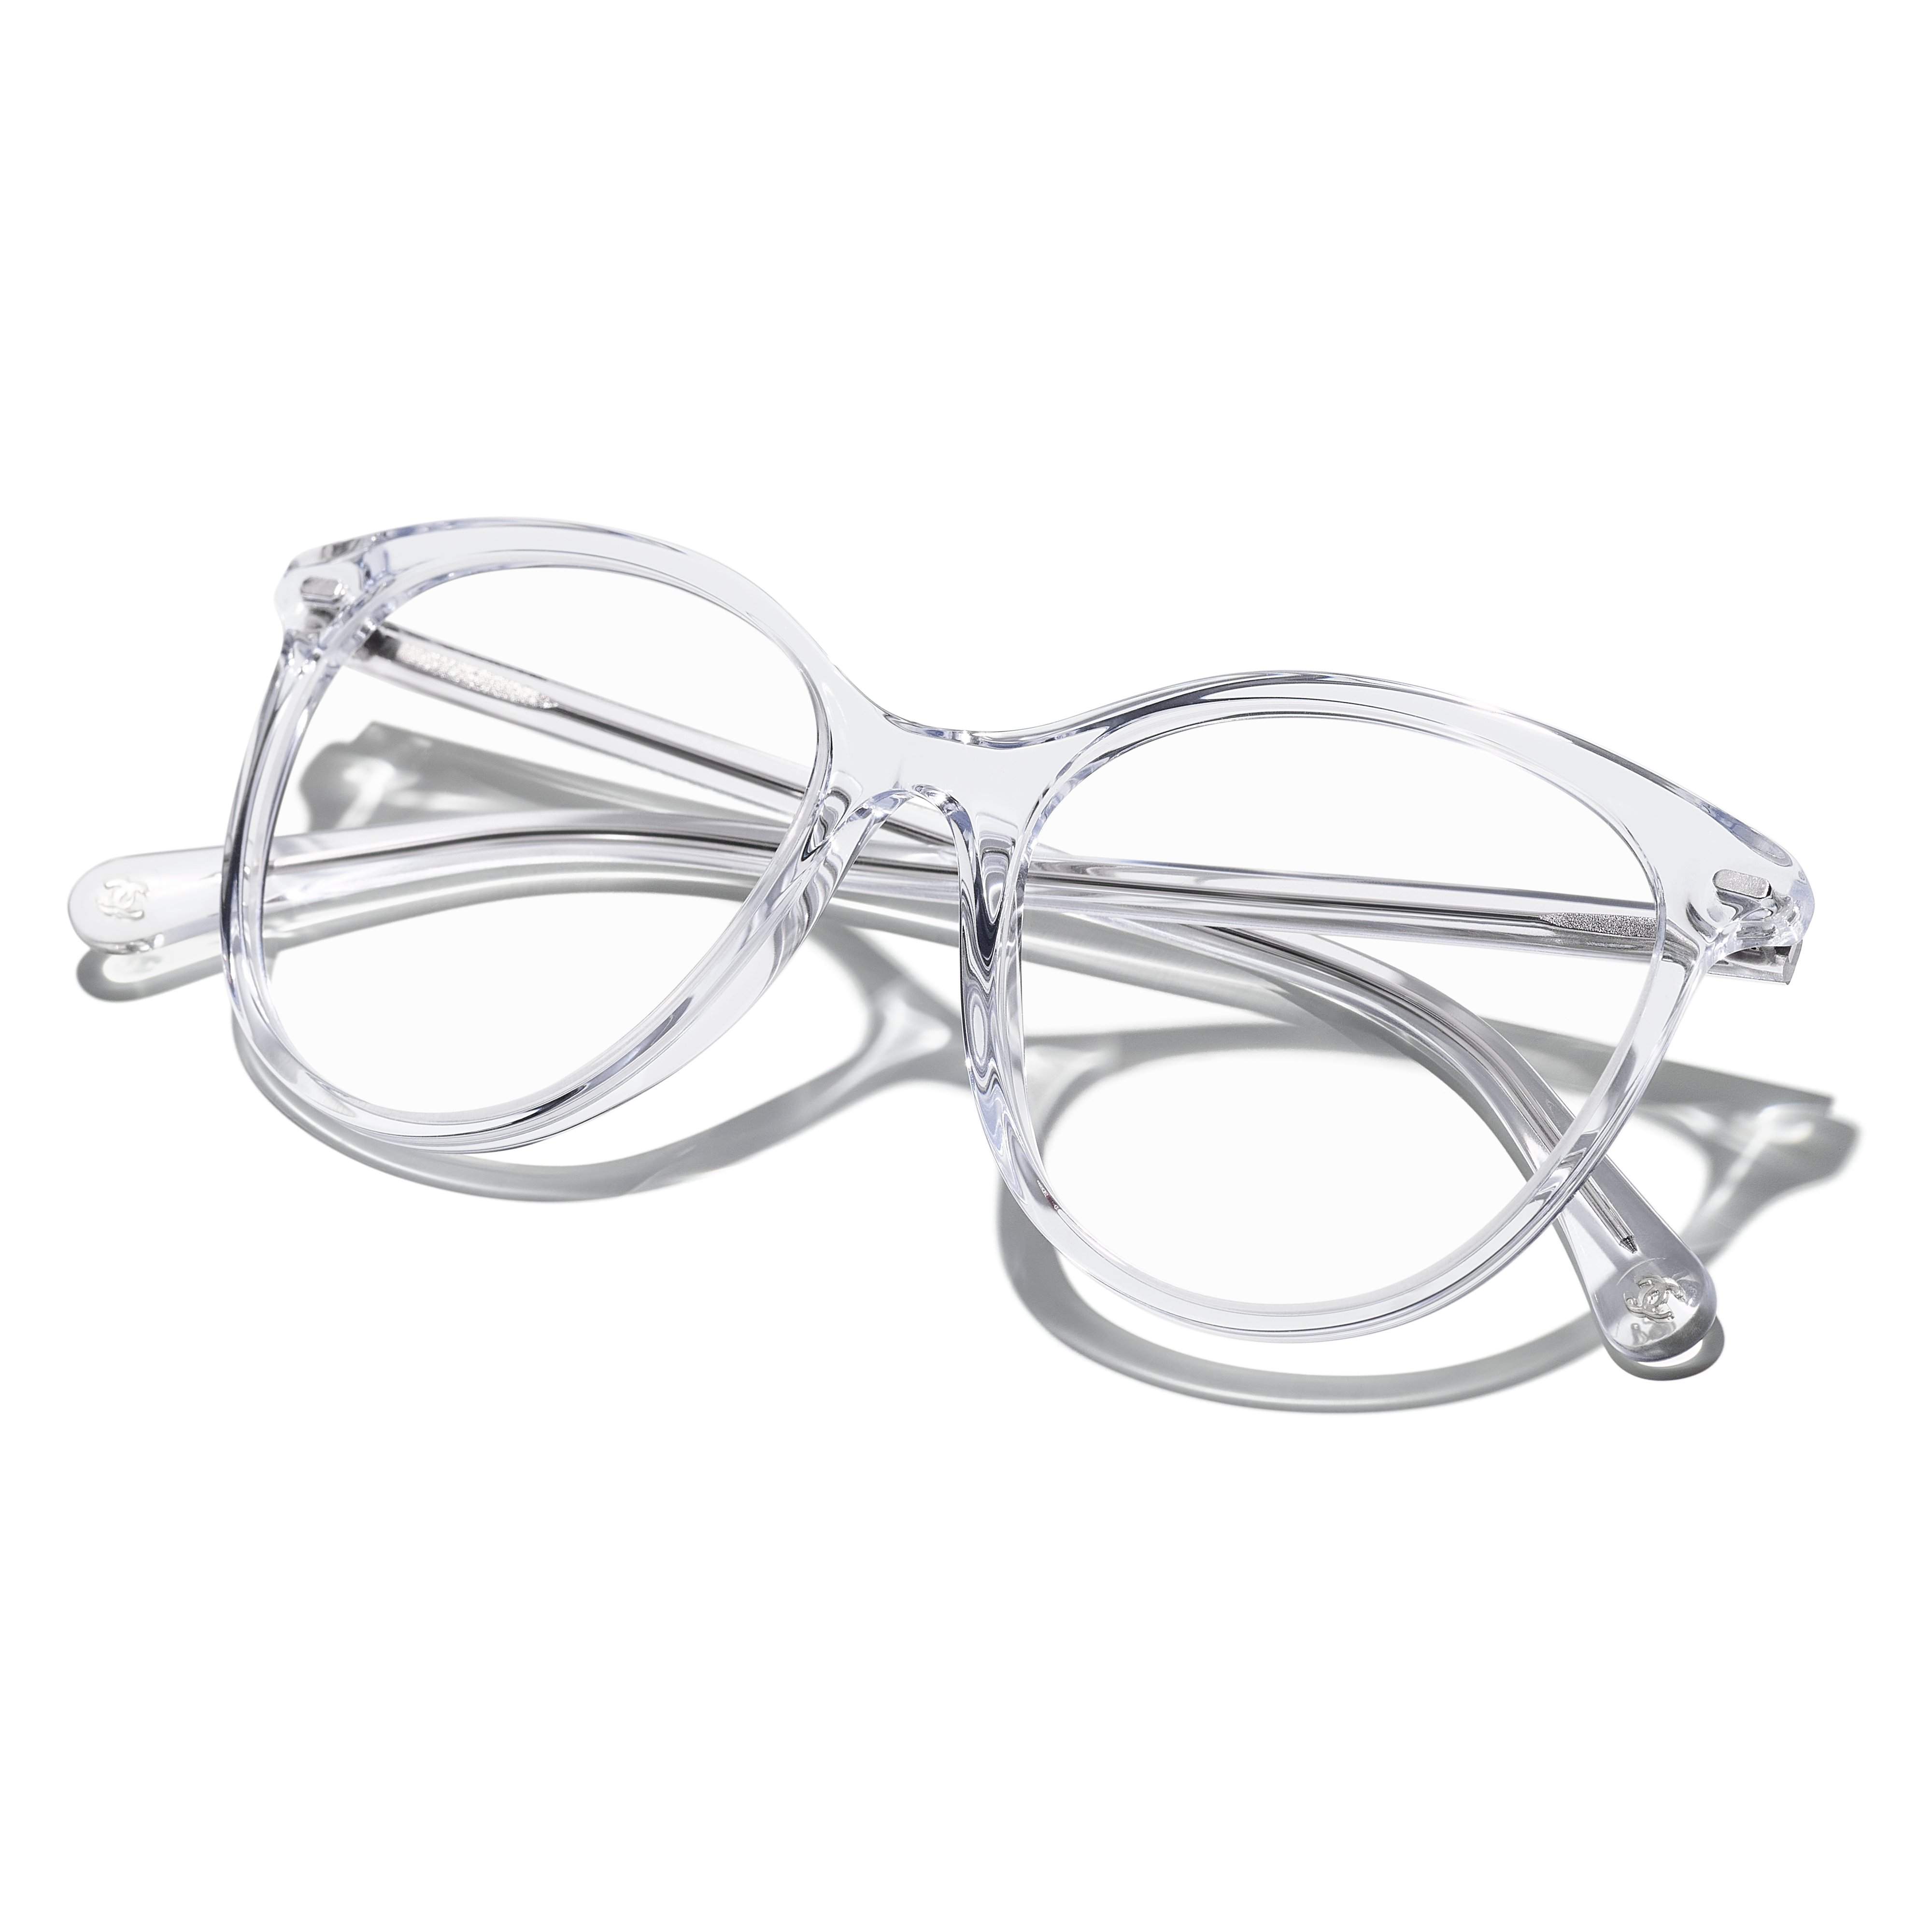 Buy Chanel Prescription Eyeglasses Online